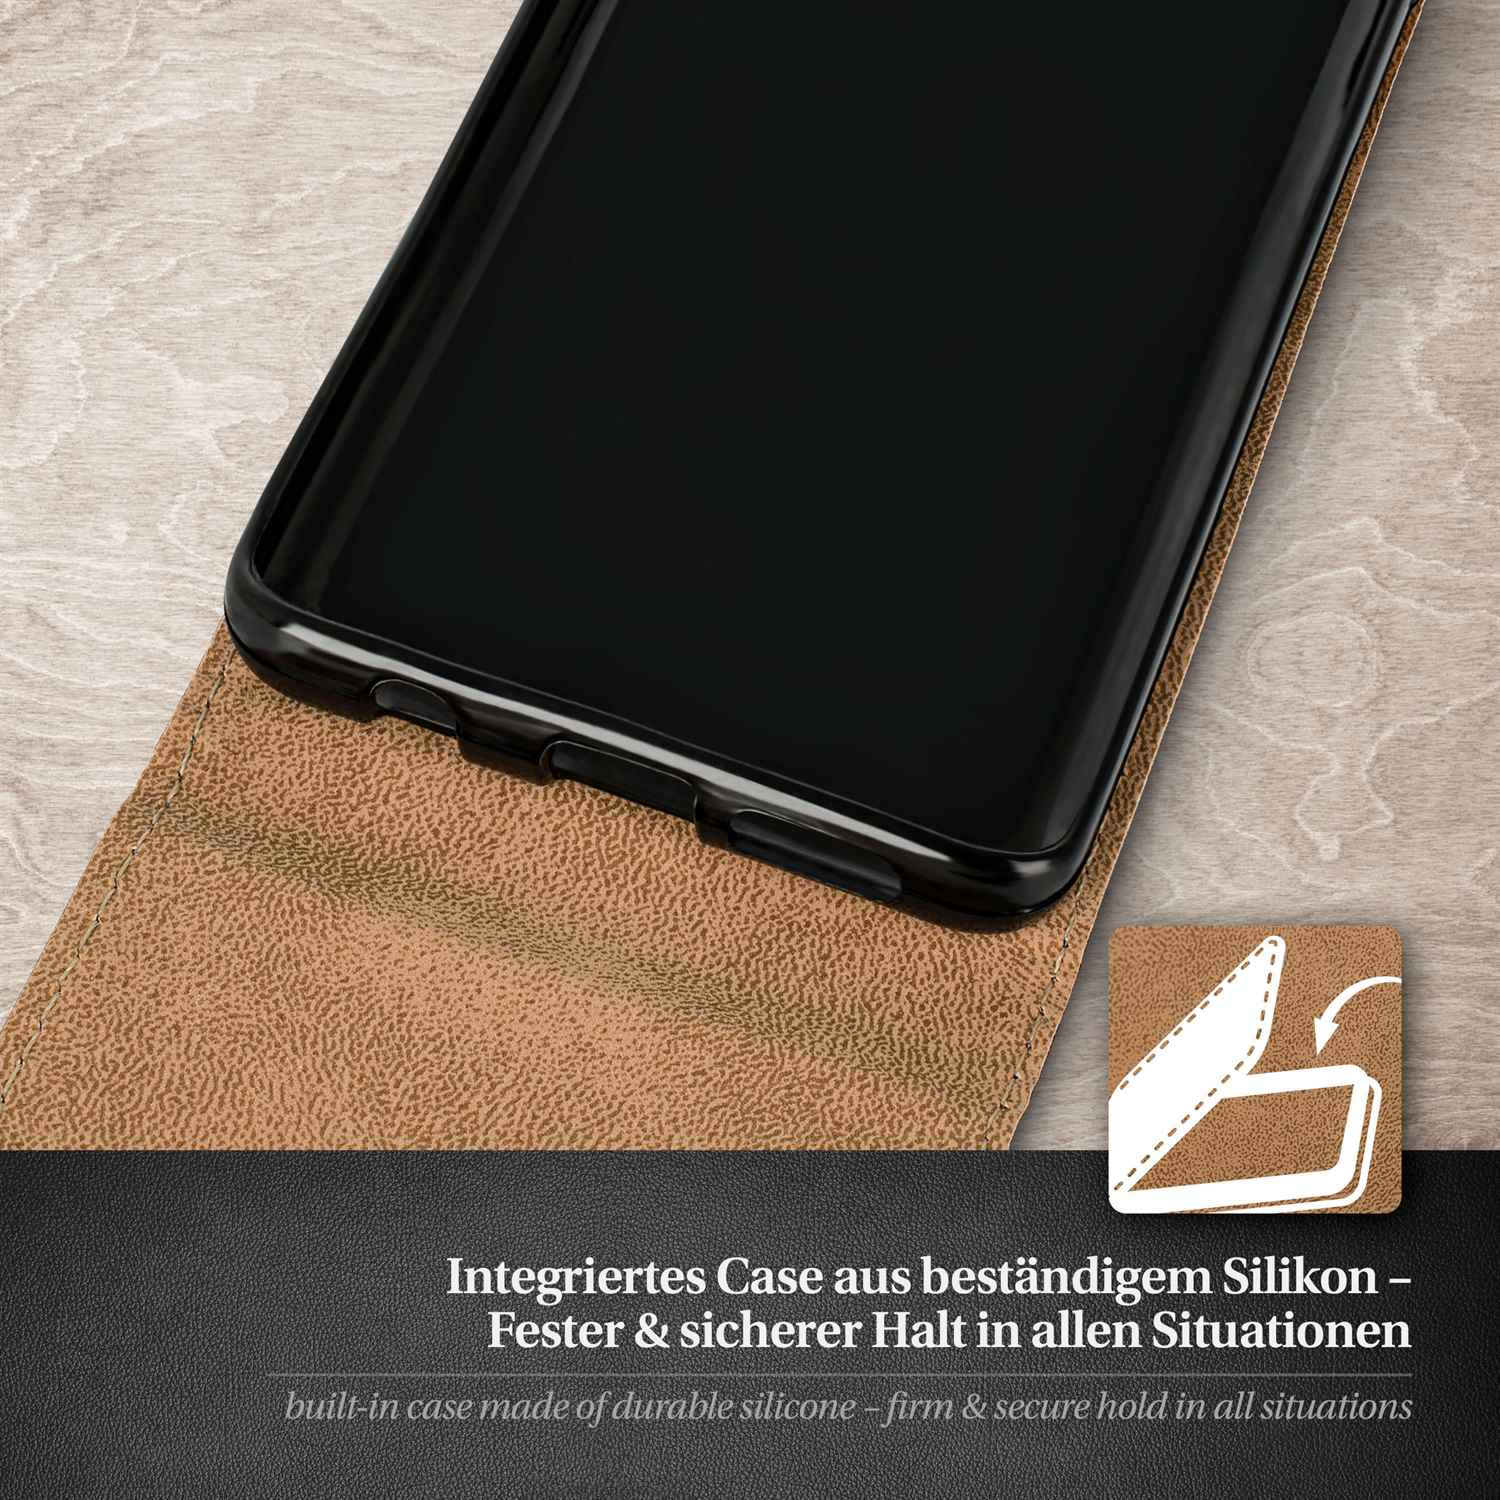 MOEX Flip Cover, S20, Flip Oxide-Brown Case, Galaxy Samsung